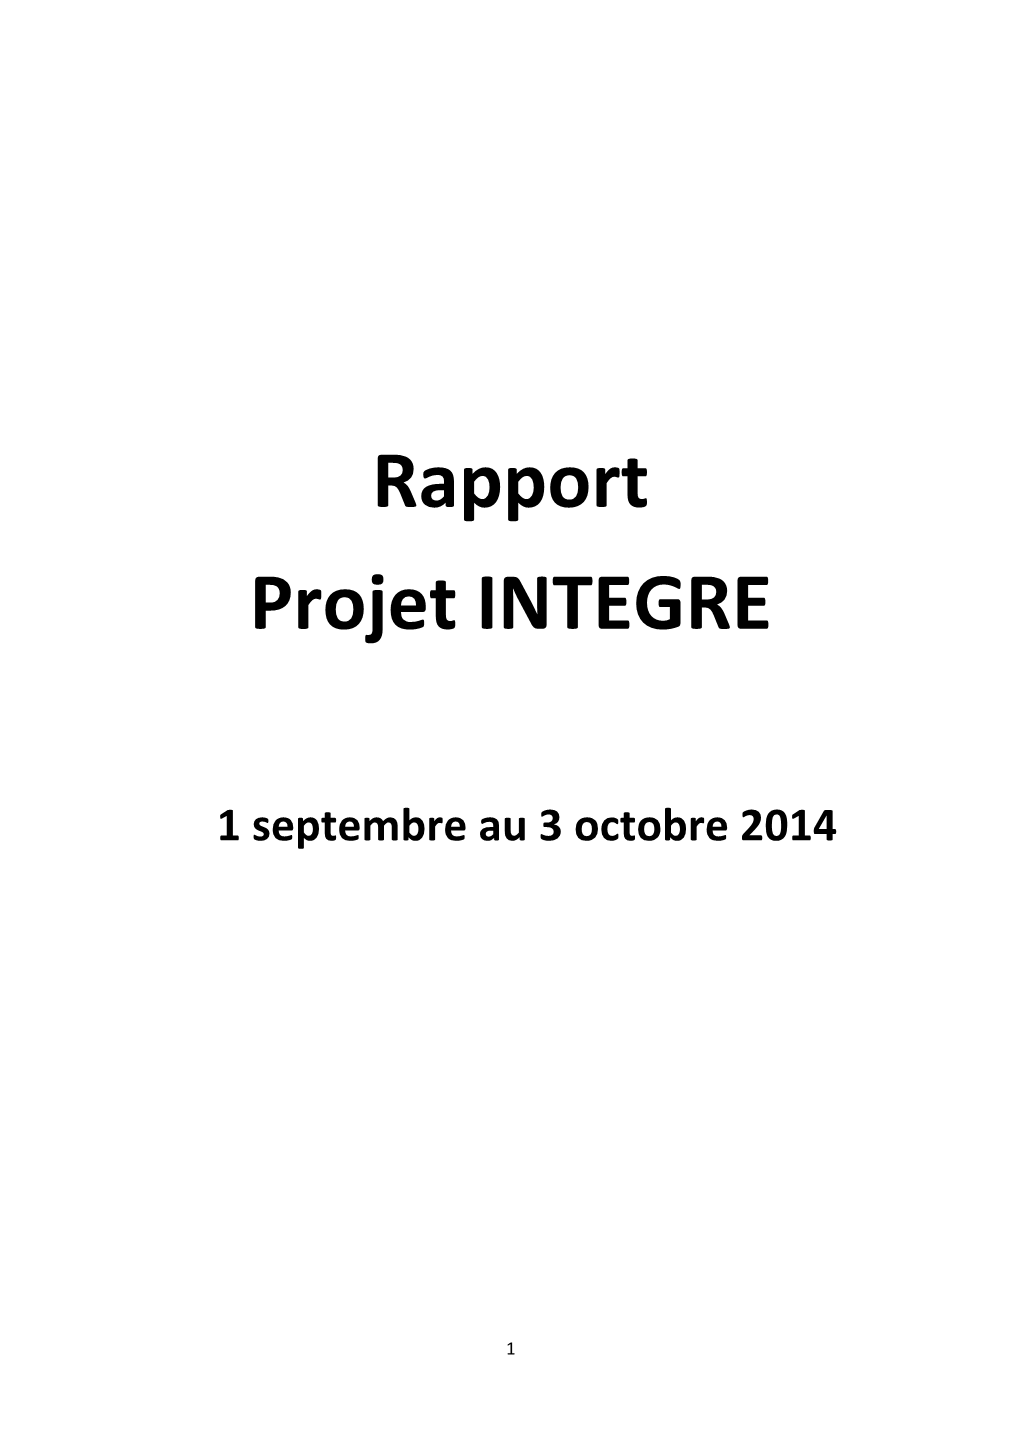 Rapport Projet INTEGRE